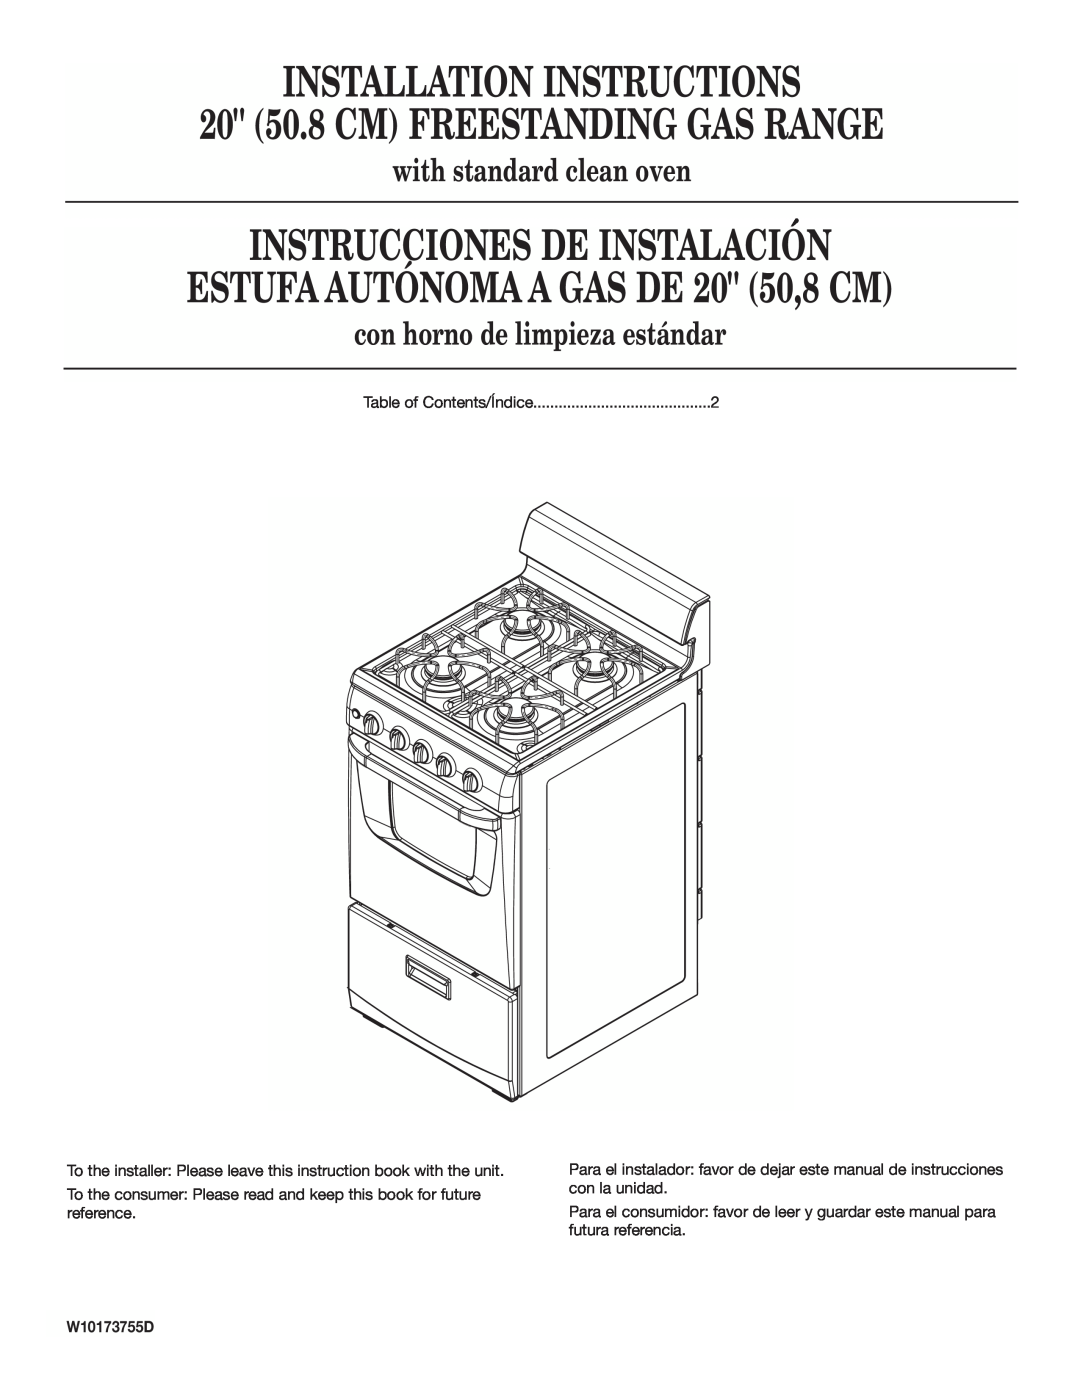 Estate W10173755D installation instructions with standard clean oven, con horno de limpieza estándar 